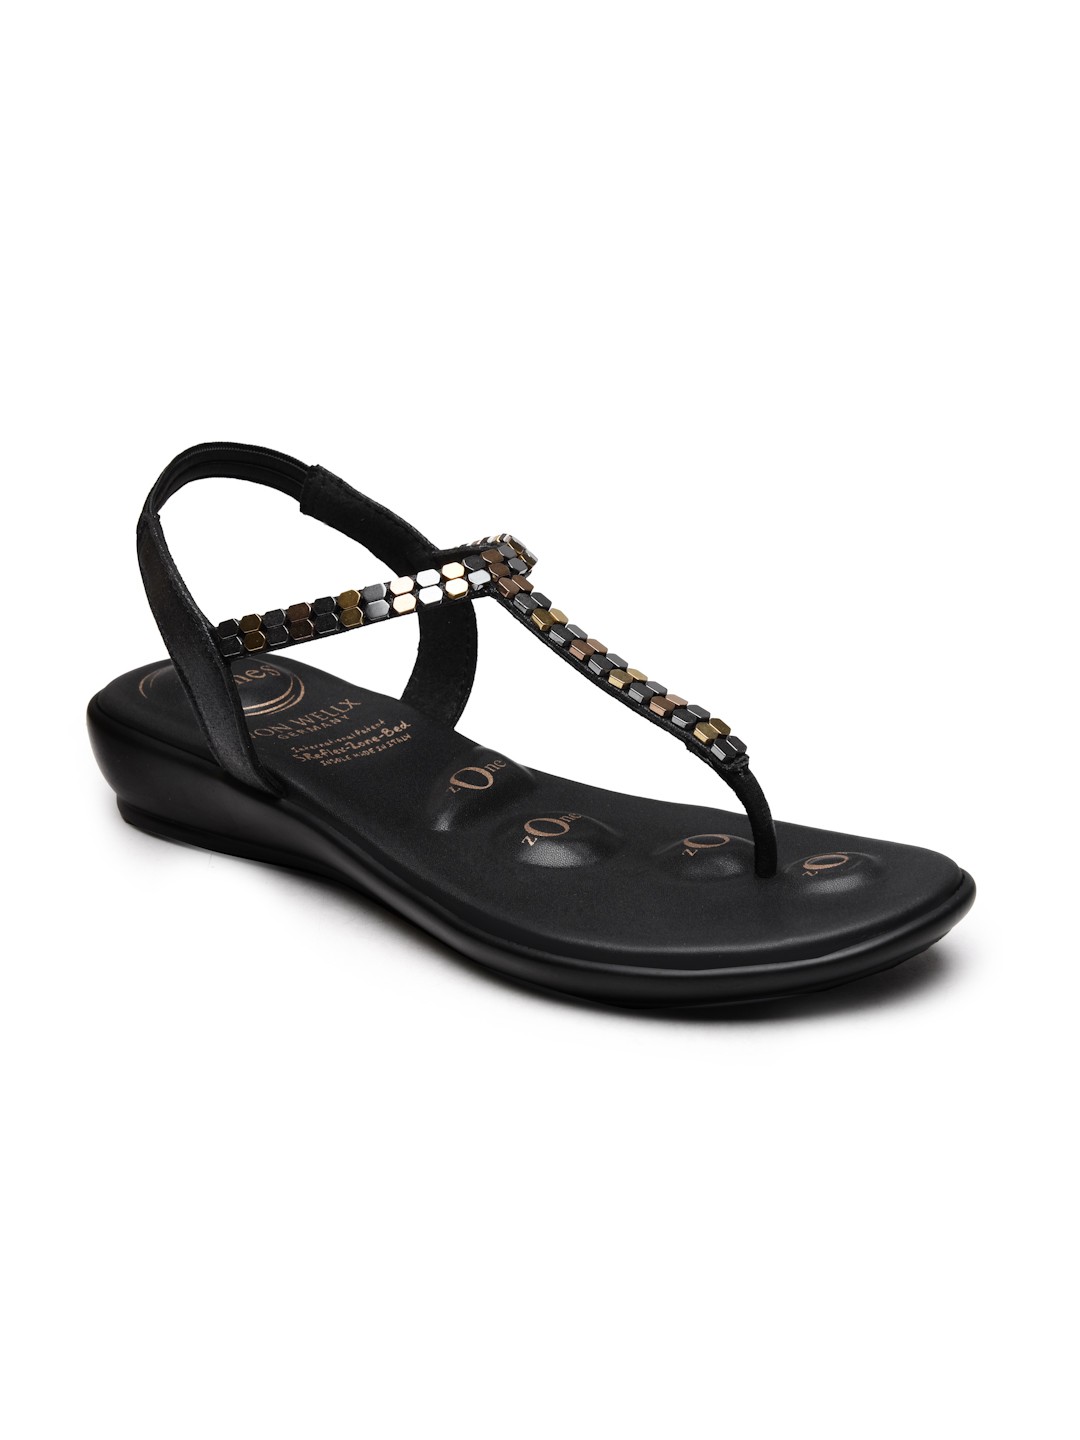 Buy Von Wellx Germany Comfort Women's Black Casual Sandals Regina Online in Jaipur